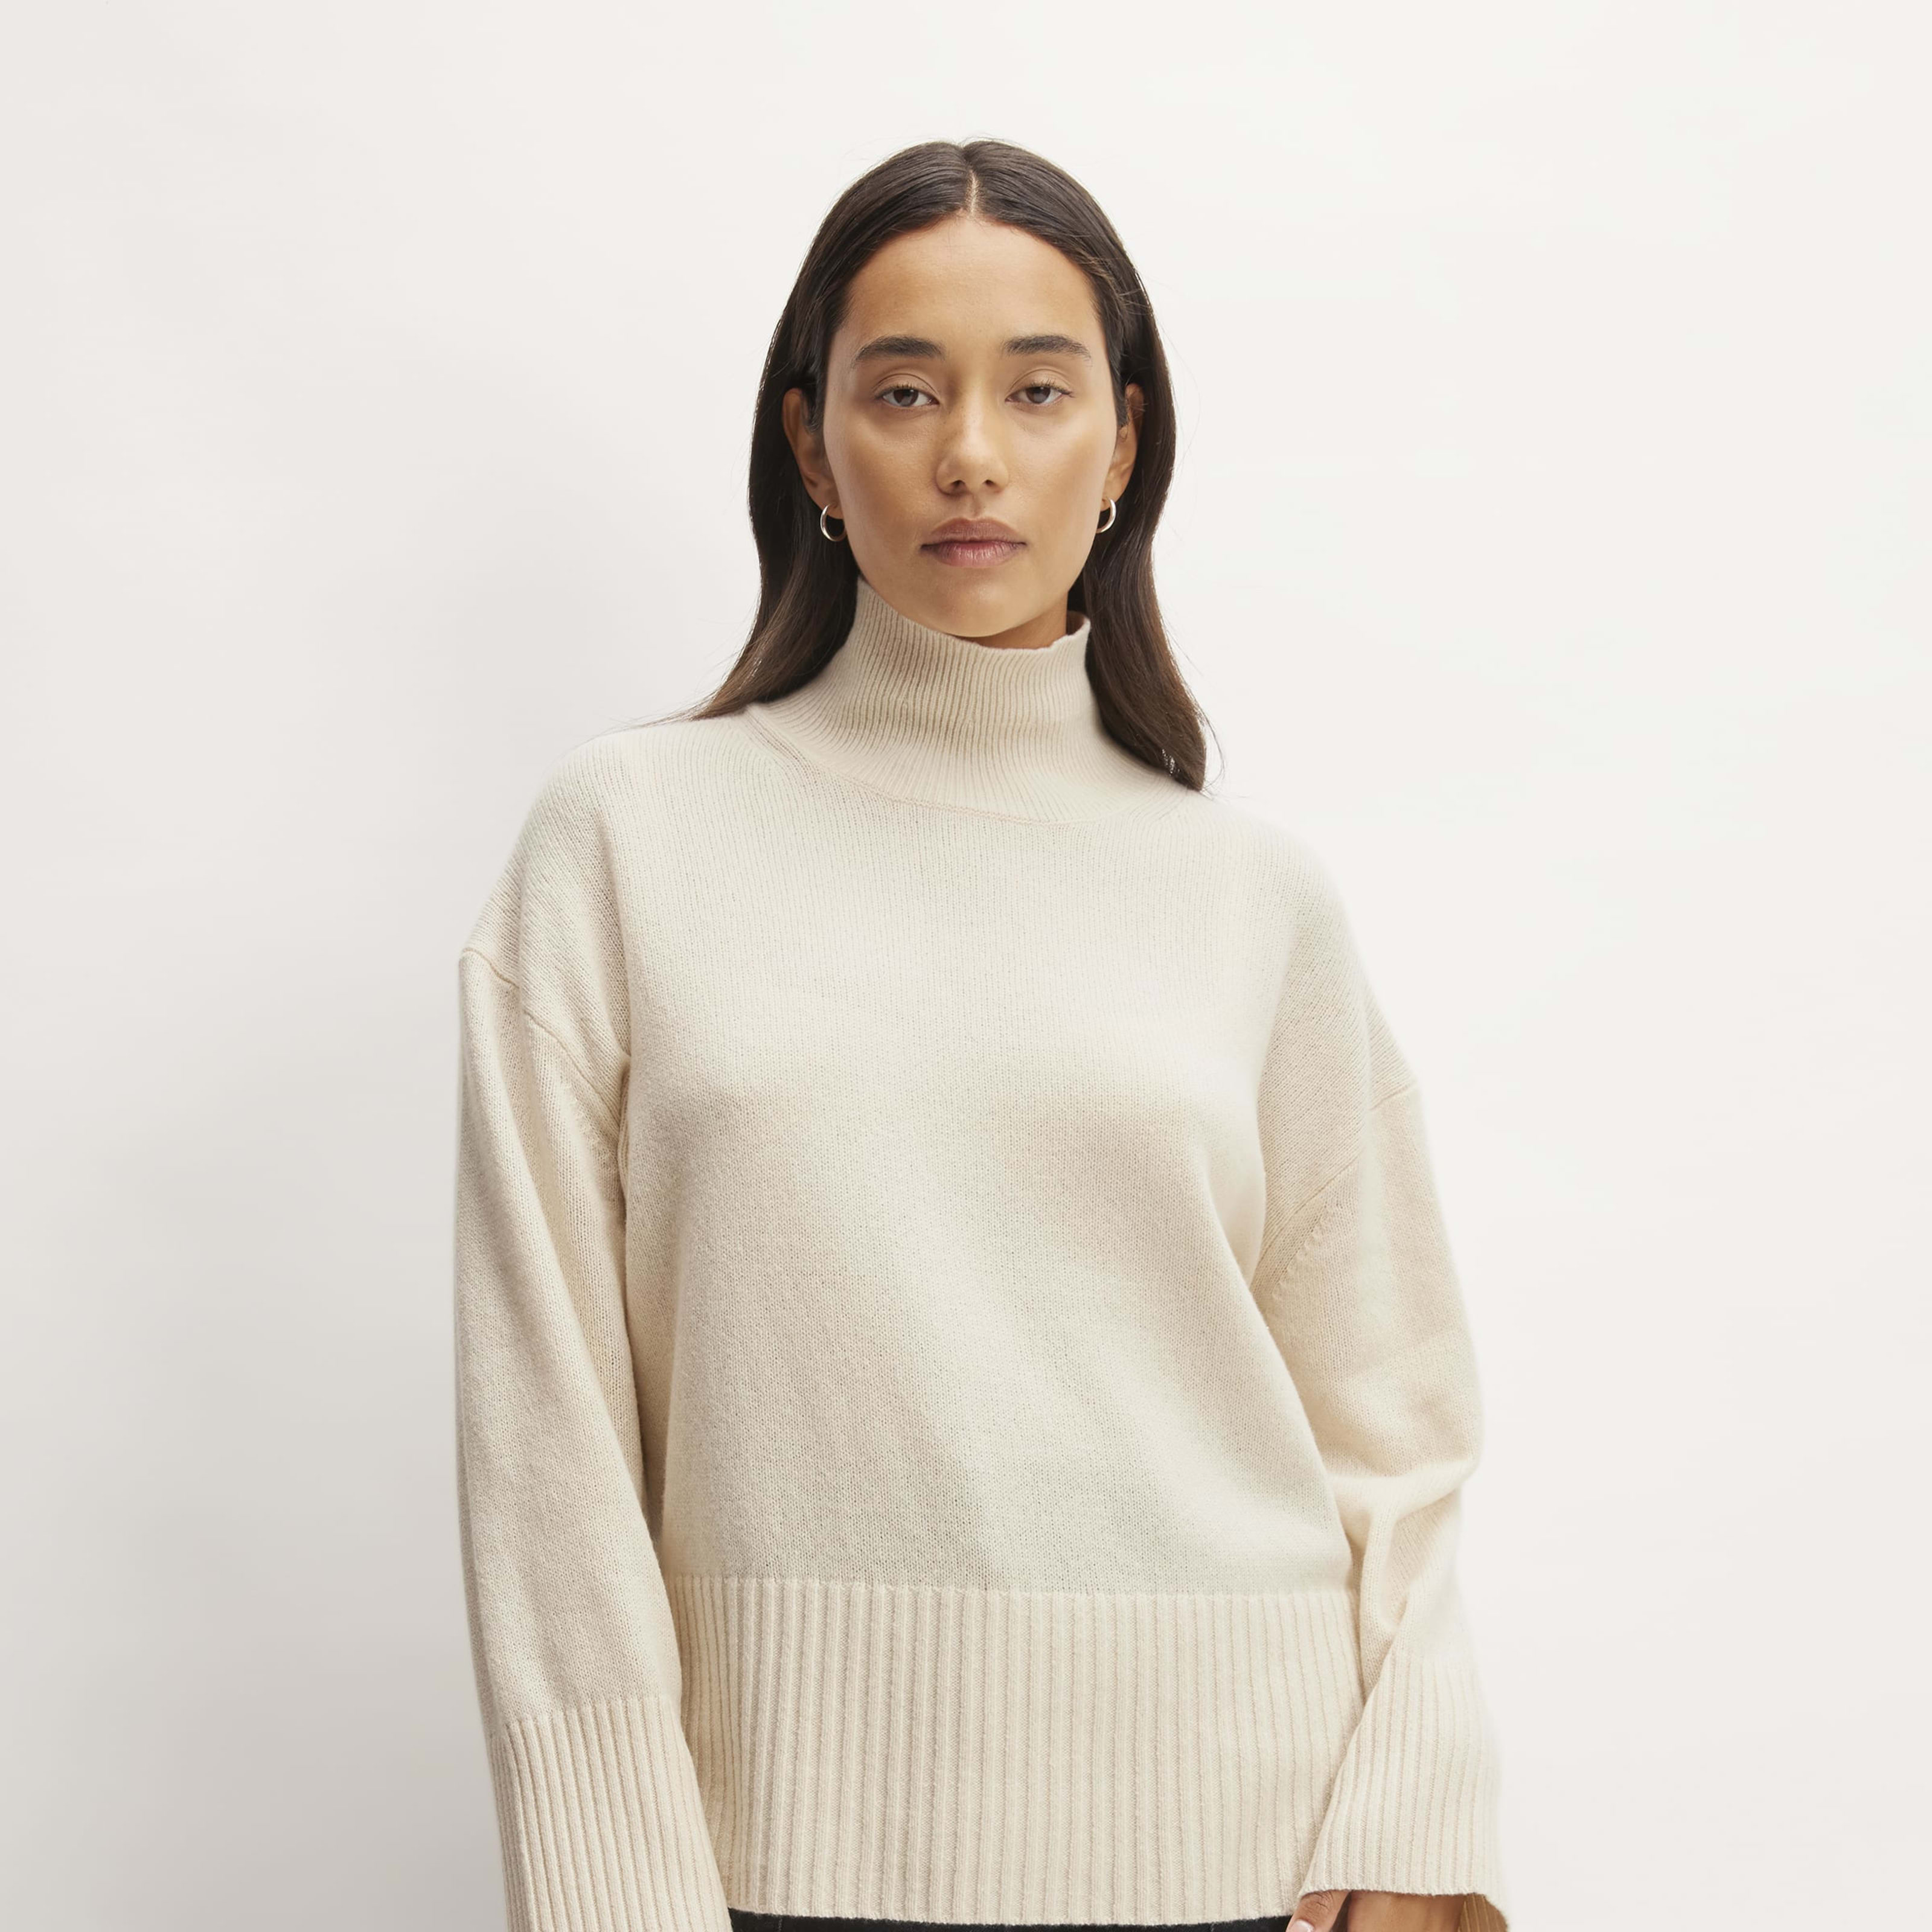 women's cashmere oversized turtleneck sweater by everlane in bone white, size xxs